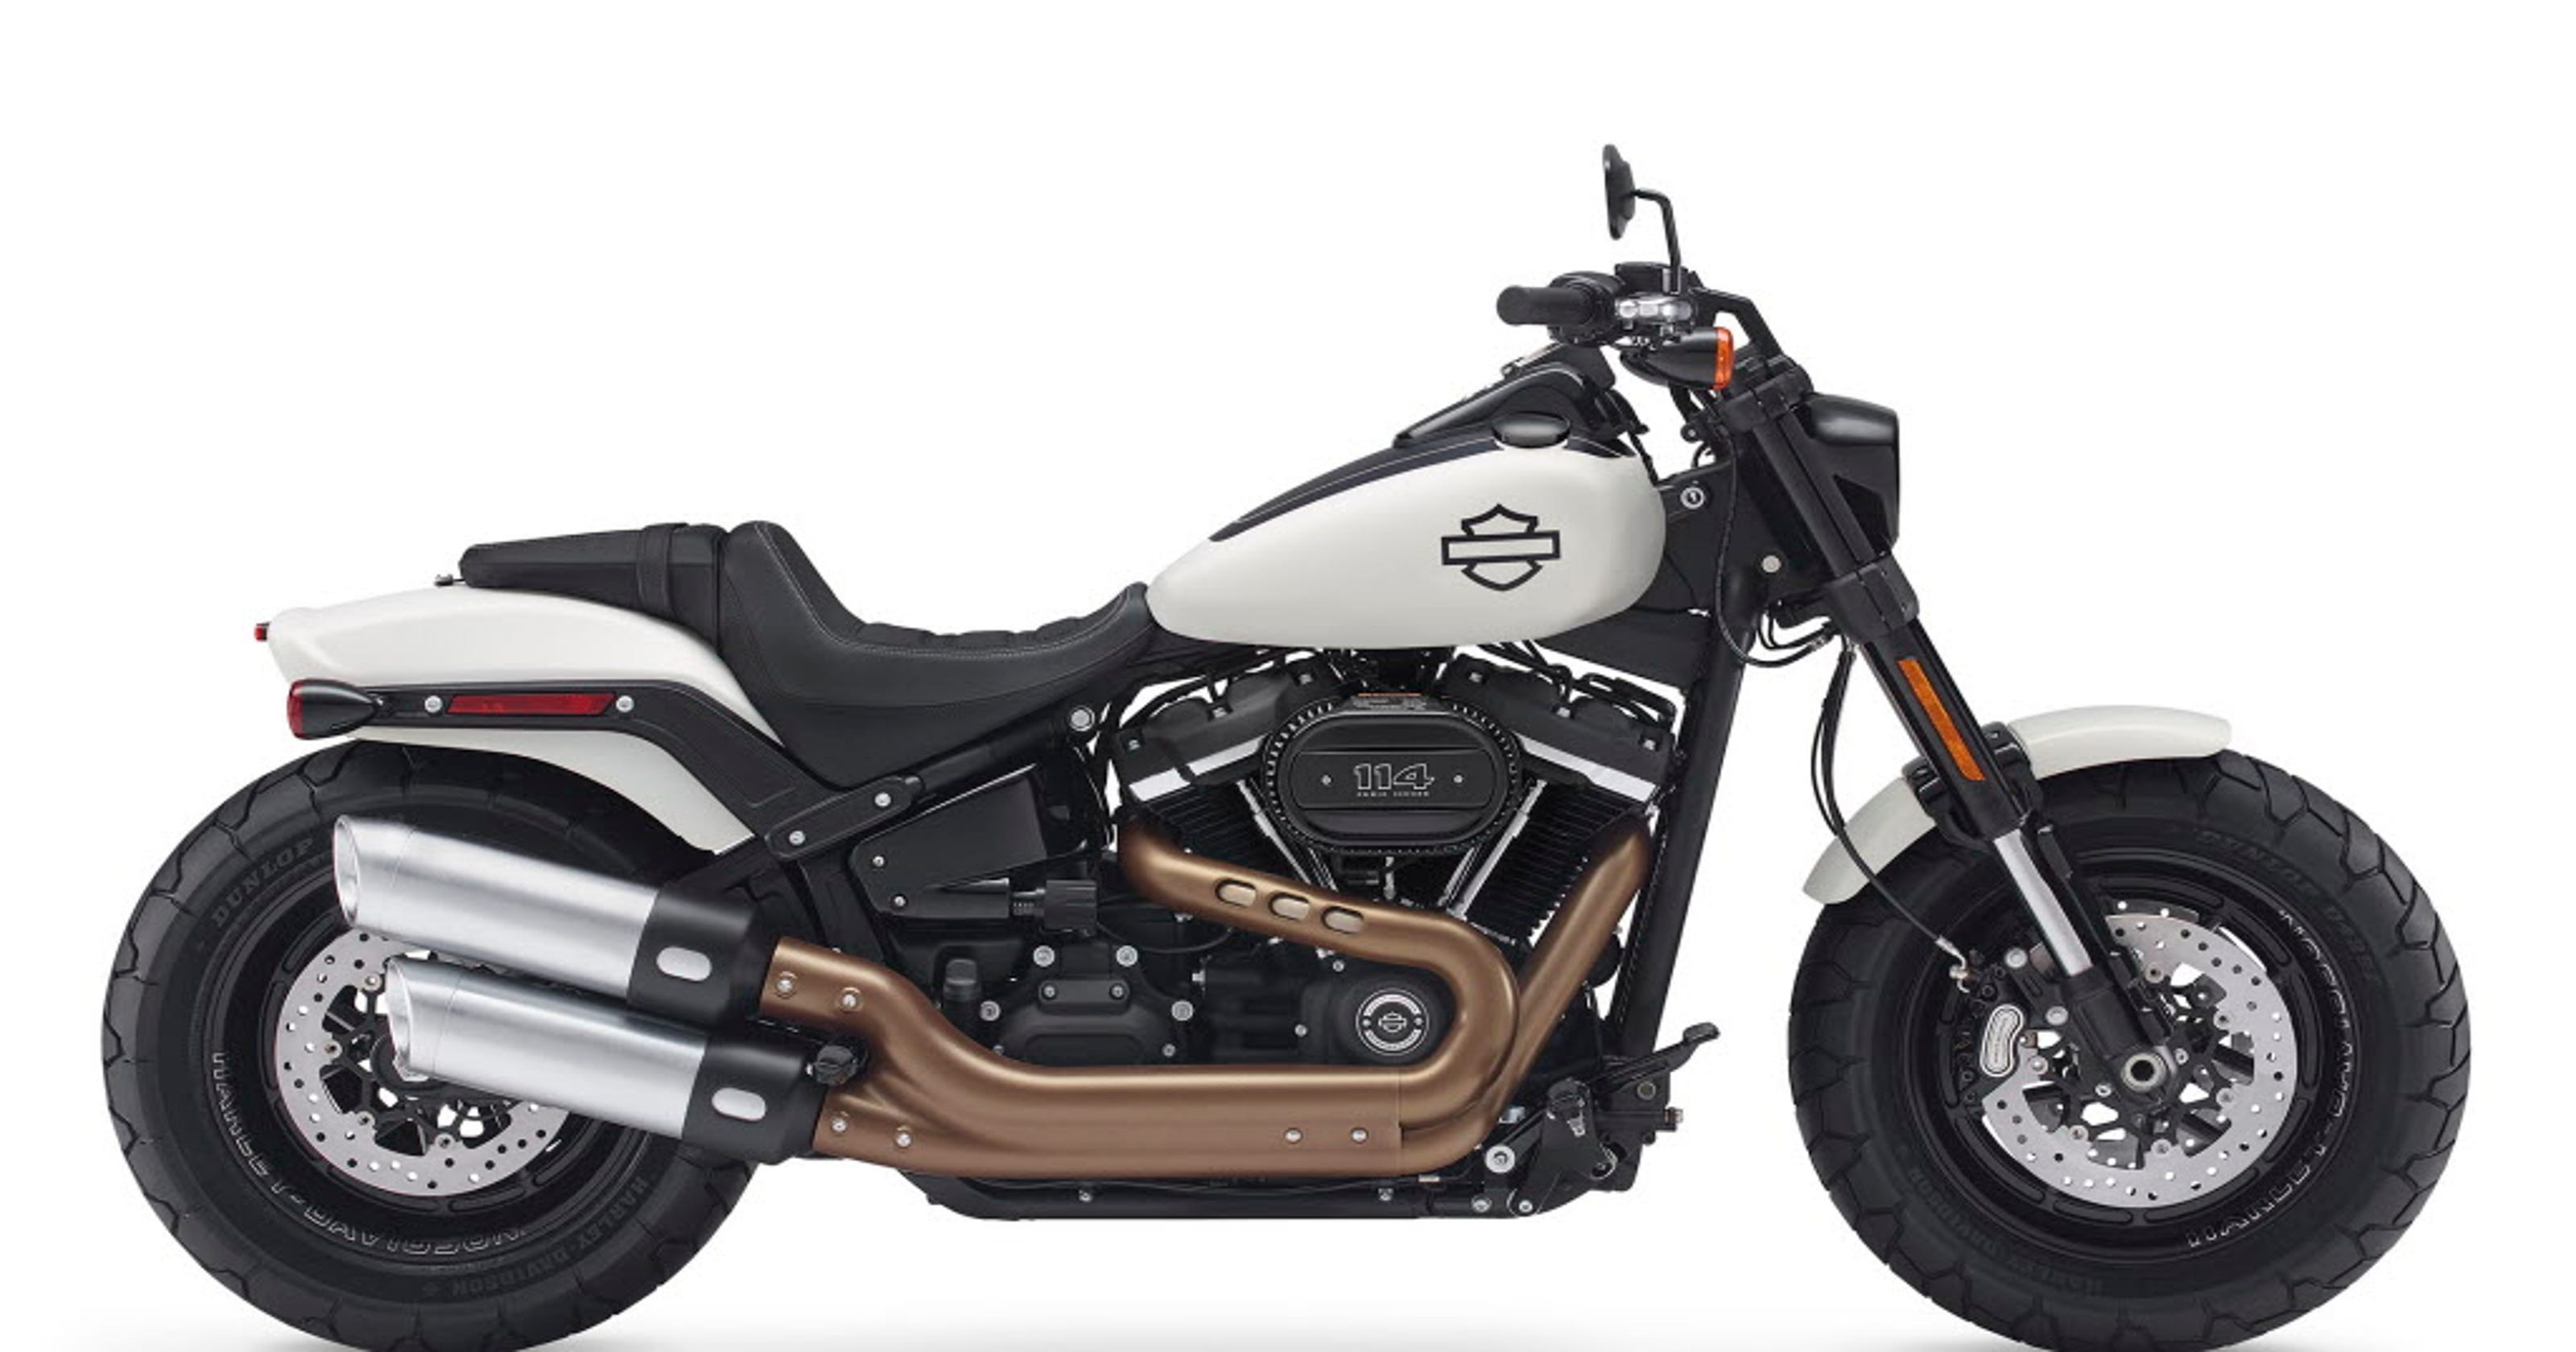  Harley  Davidson  reveals eight new  cruiser motorcycles